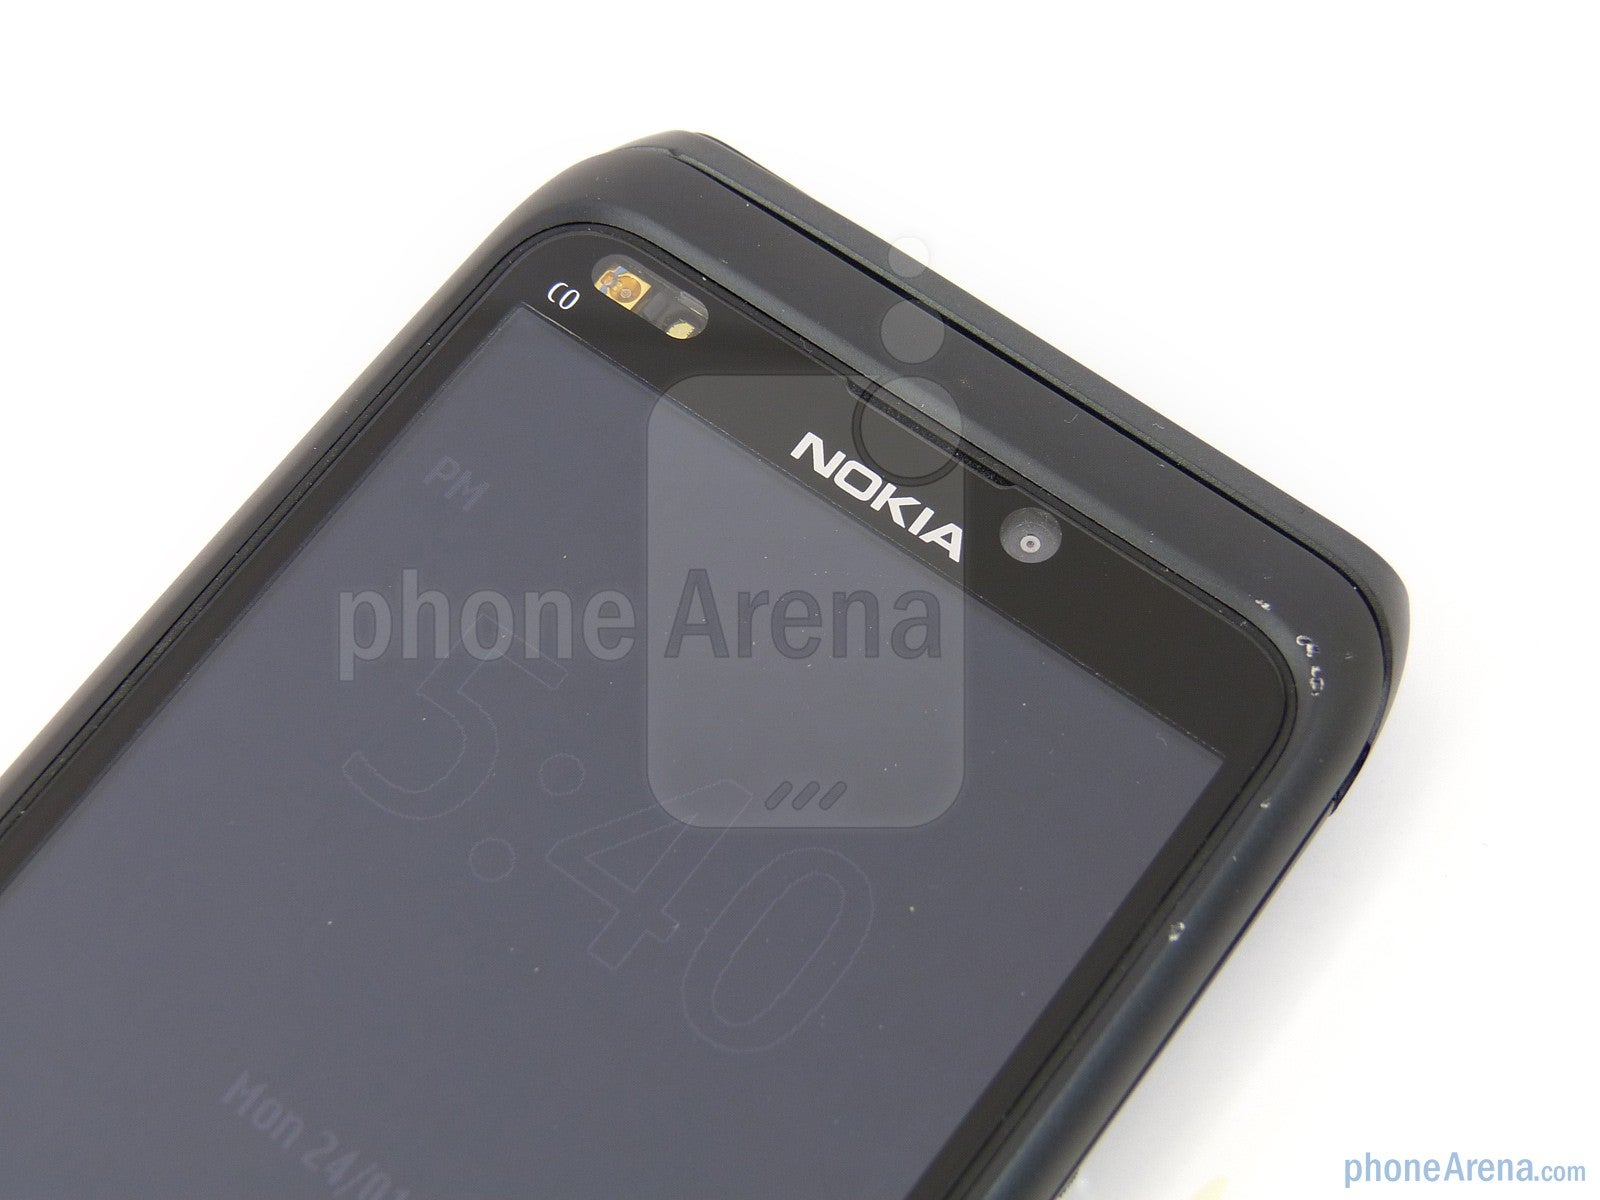 Front-facing camera - Nokia E7 Preview